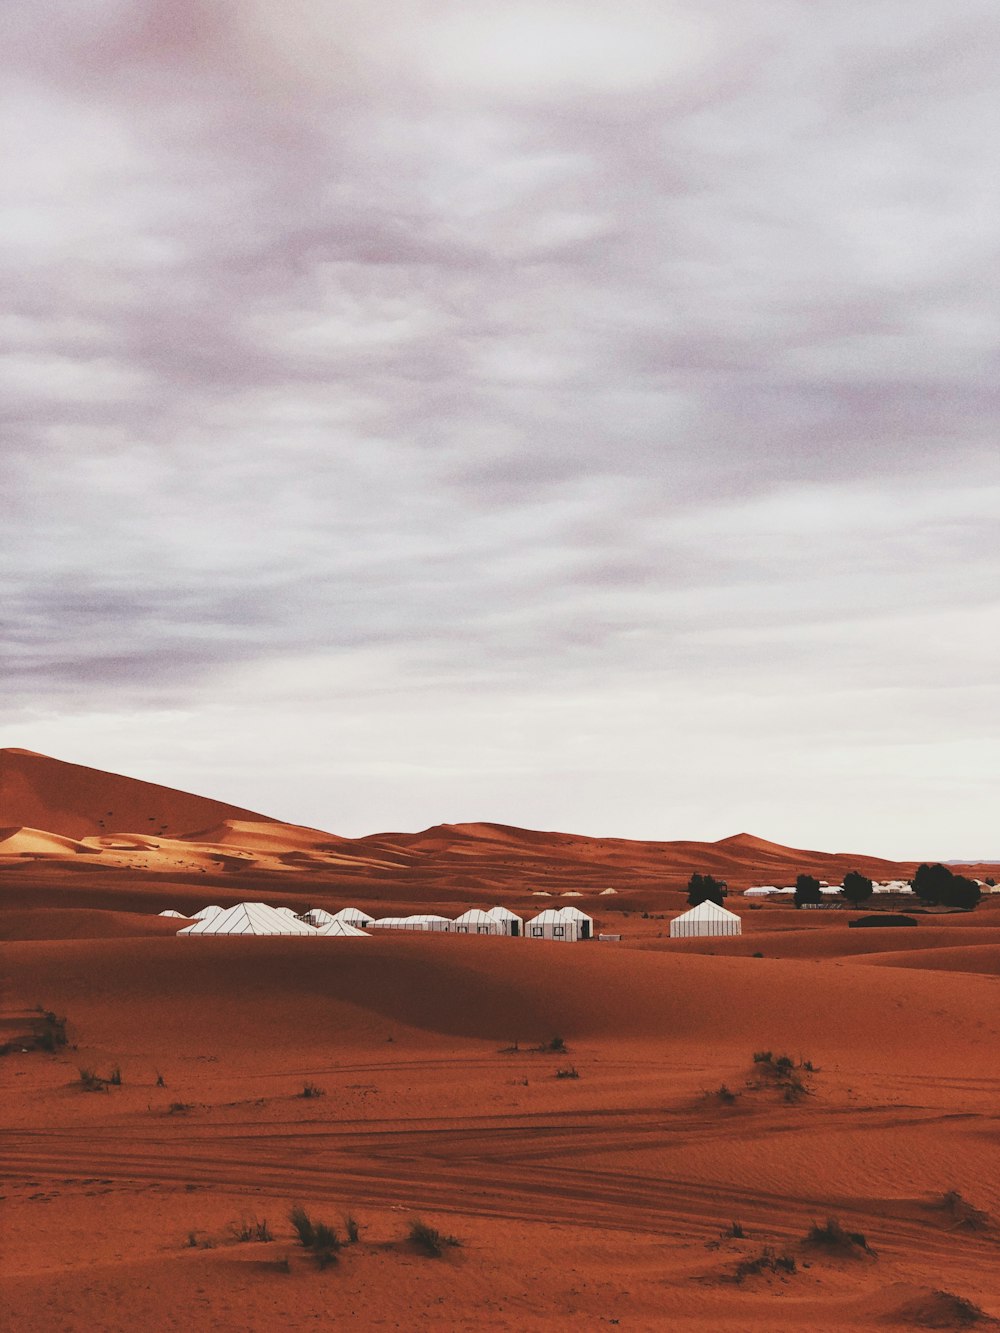 white canopies on desert